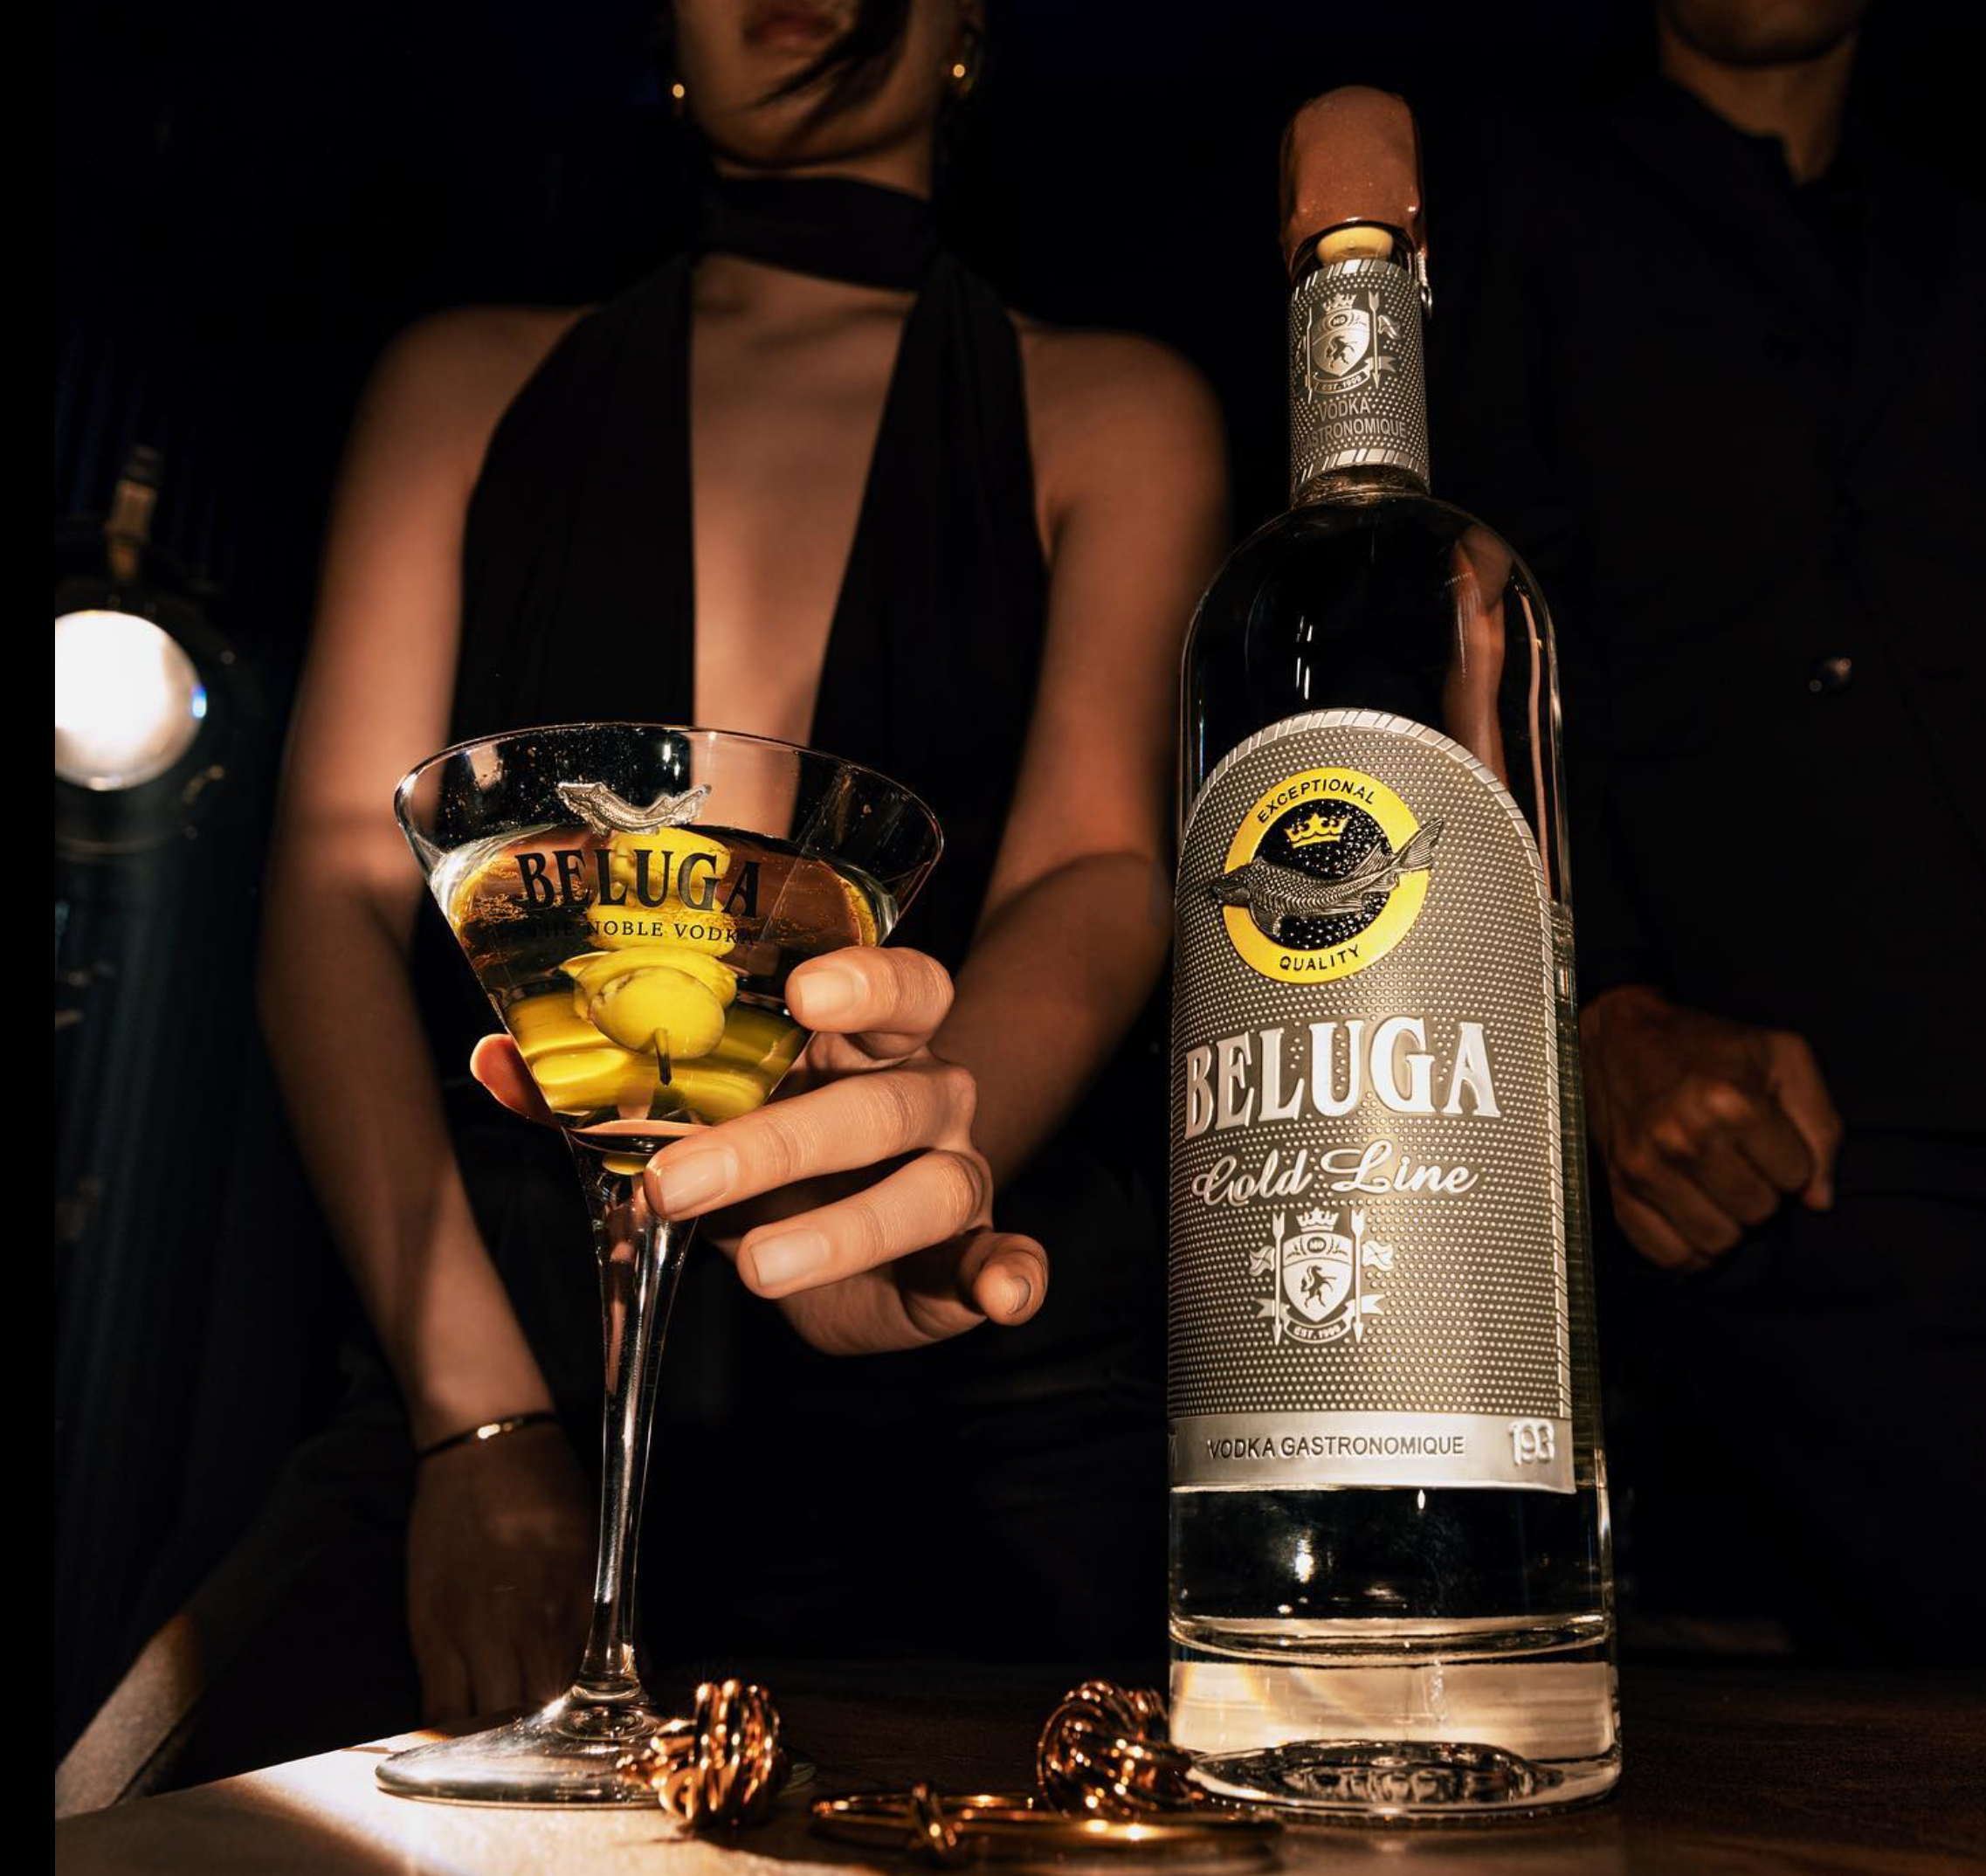 Beluga Gold Line Vodka 1.75L